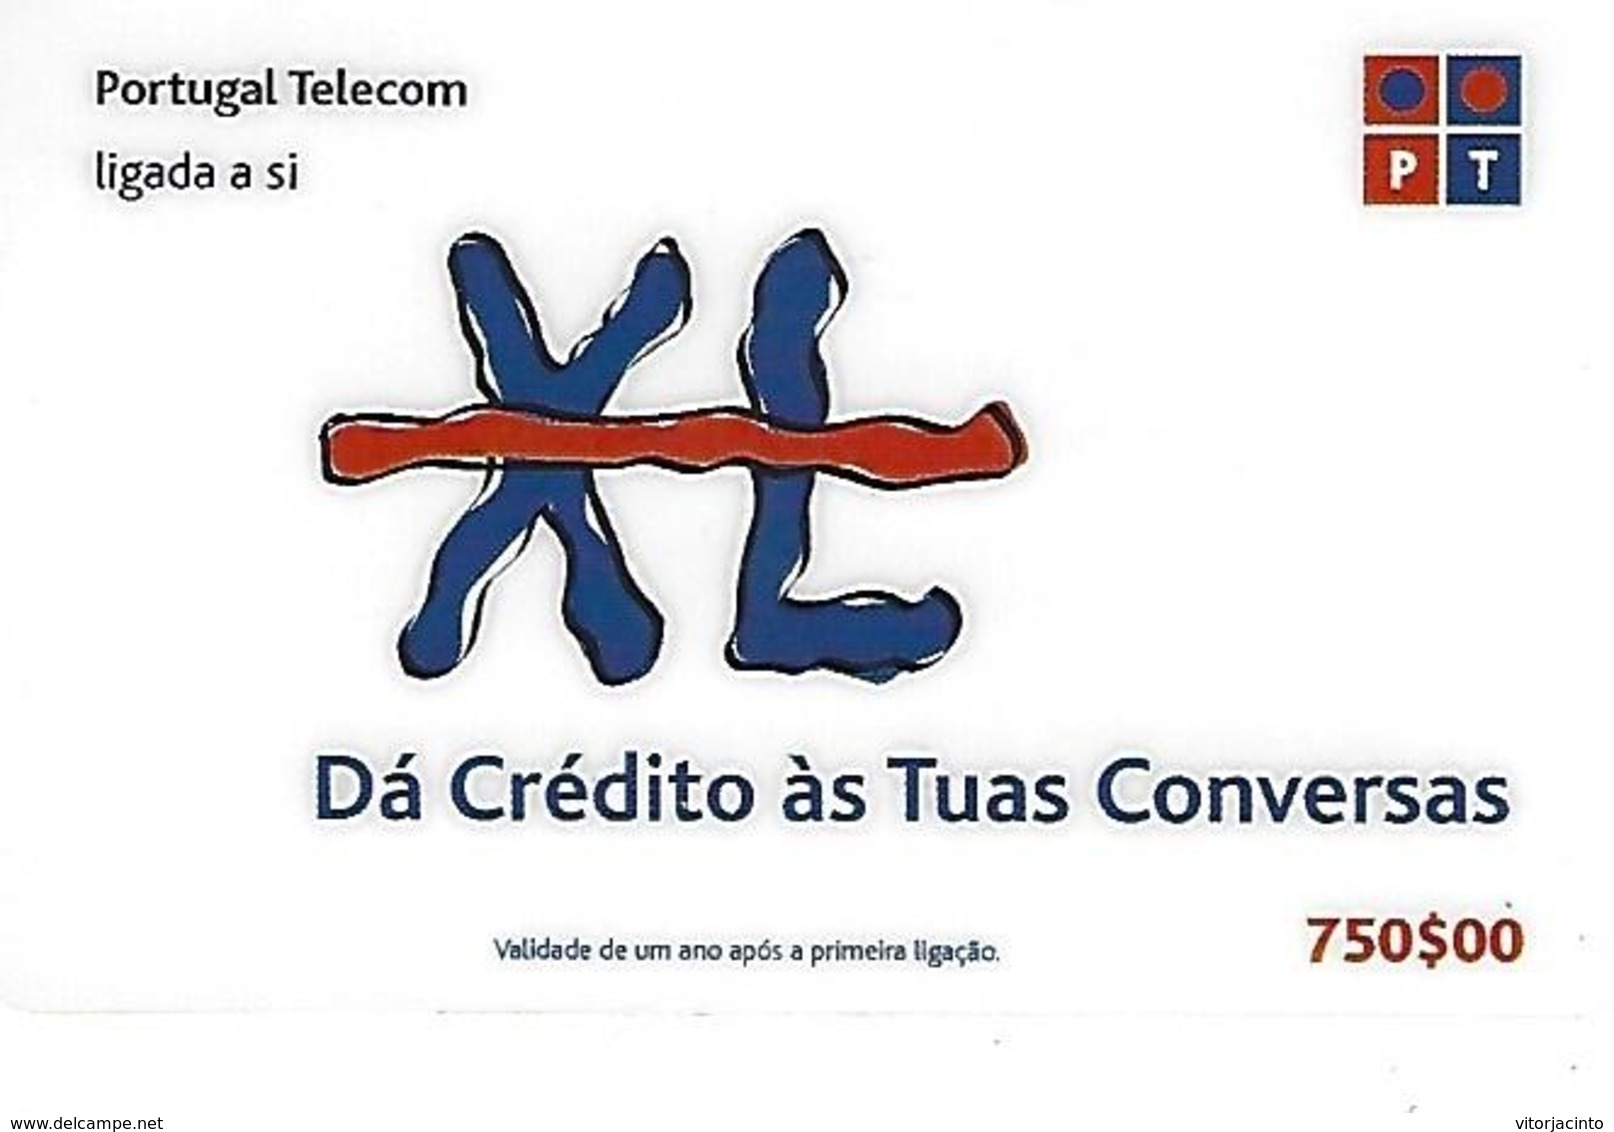 XL PT (Dá Crédito às Tuas Conversas) 750 Prepaid Phonecard - Portugal - Portugal